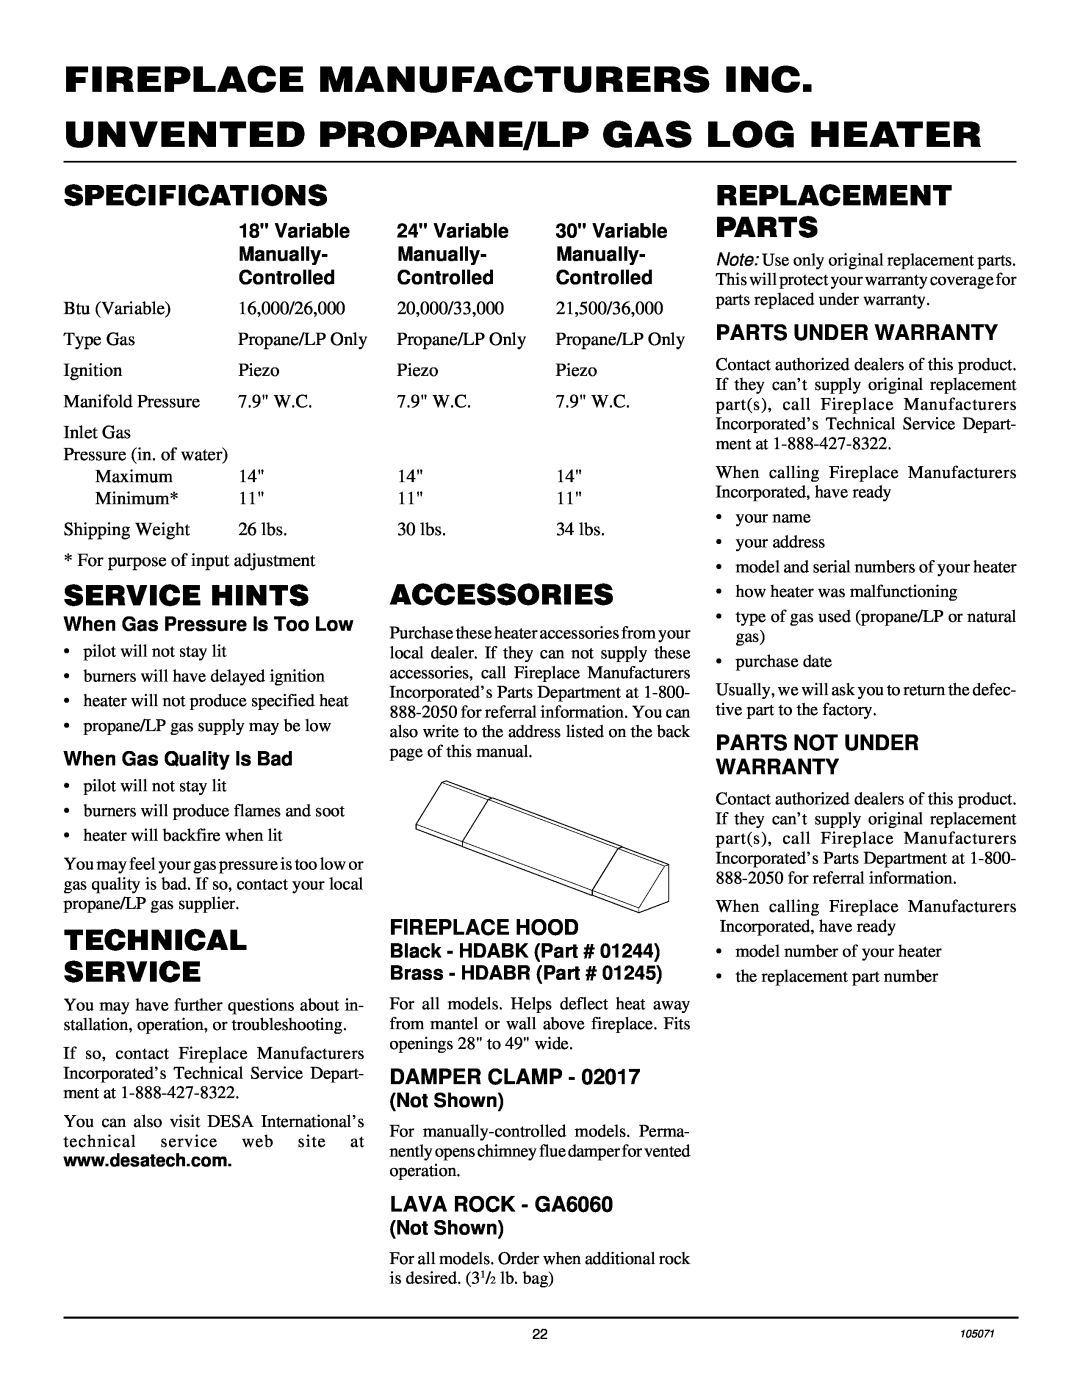 Desa VFP24MV Specifications, Service Hints, Technical Service, Accessories, Replacement Parts, Fireplace Manufacturers Inc 